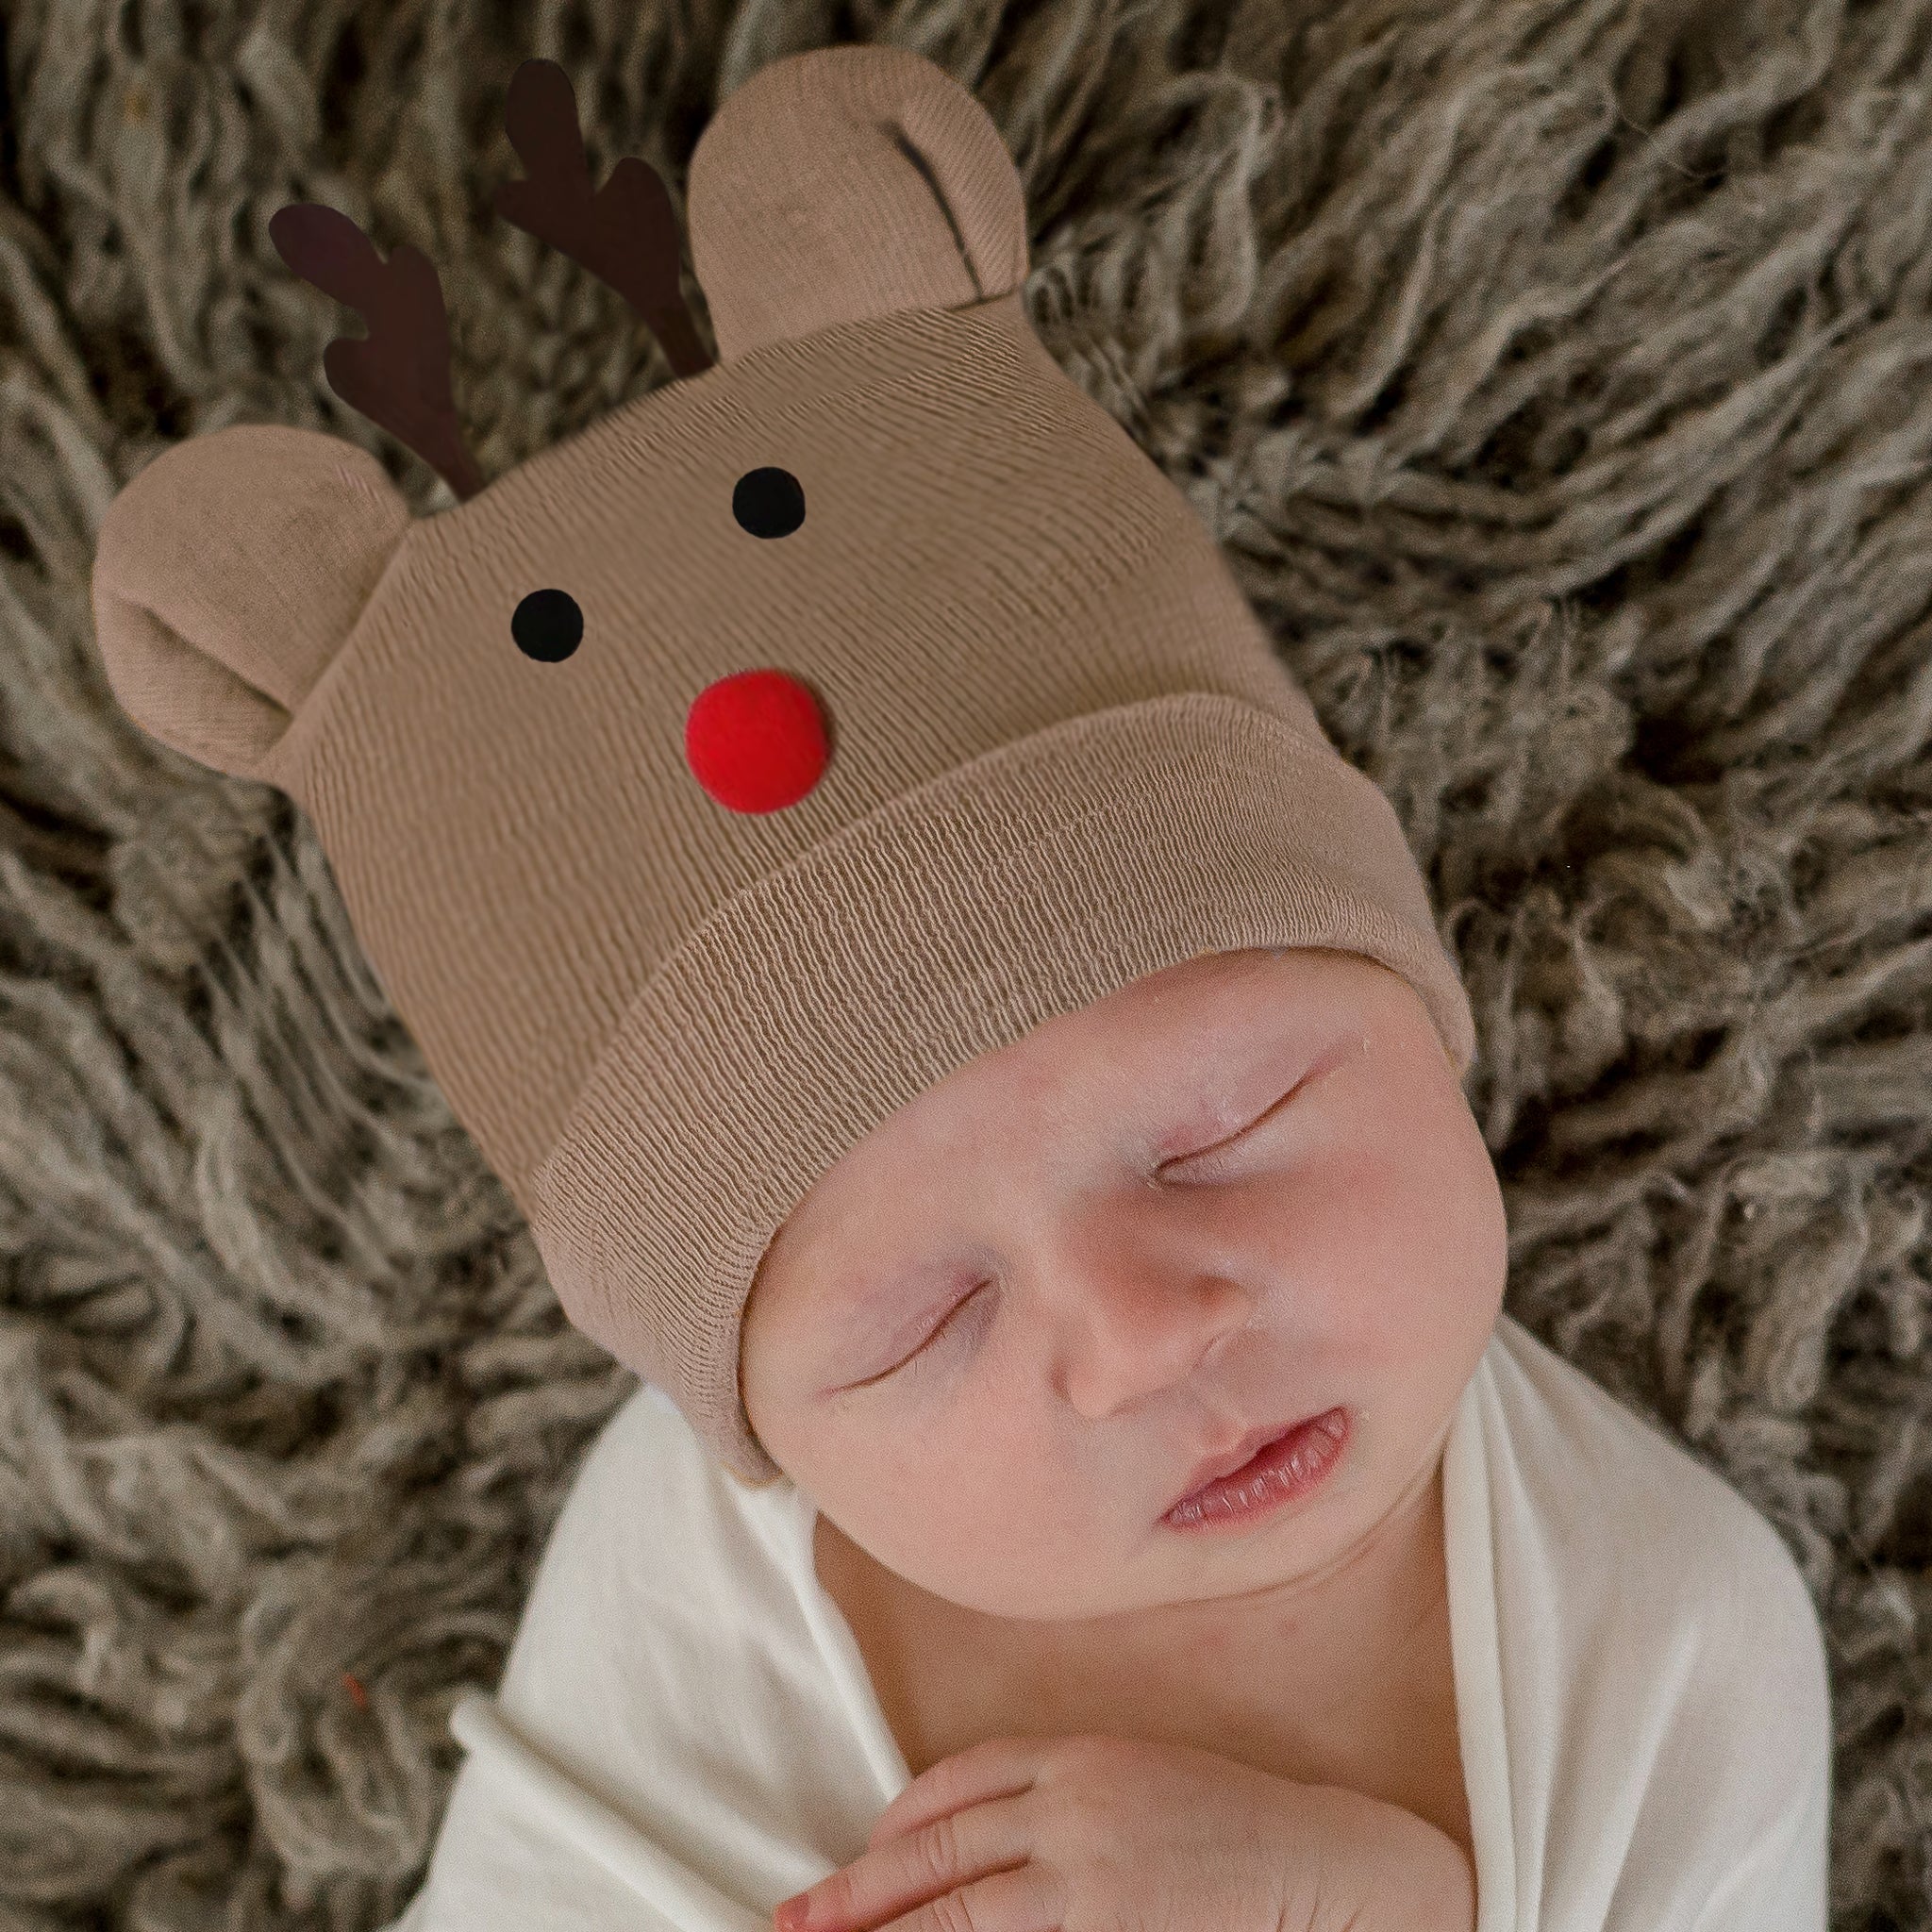 Rudolph Reindeer Hospital Hat - Nebborn and 0-3 months size - Newborn Nursery Christmas Hat